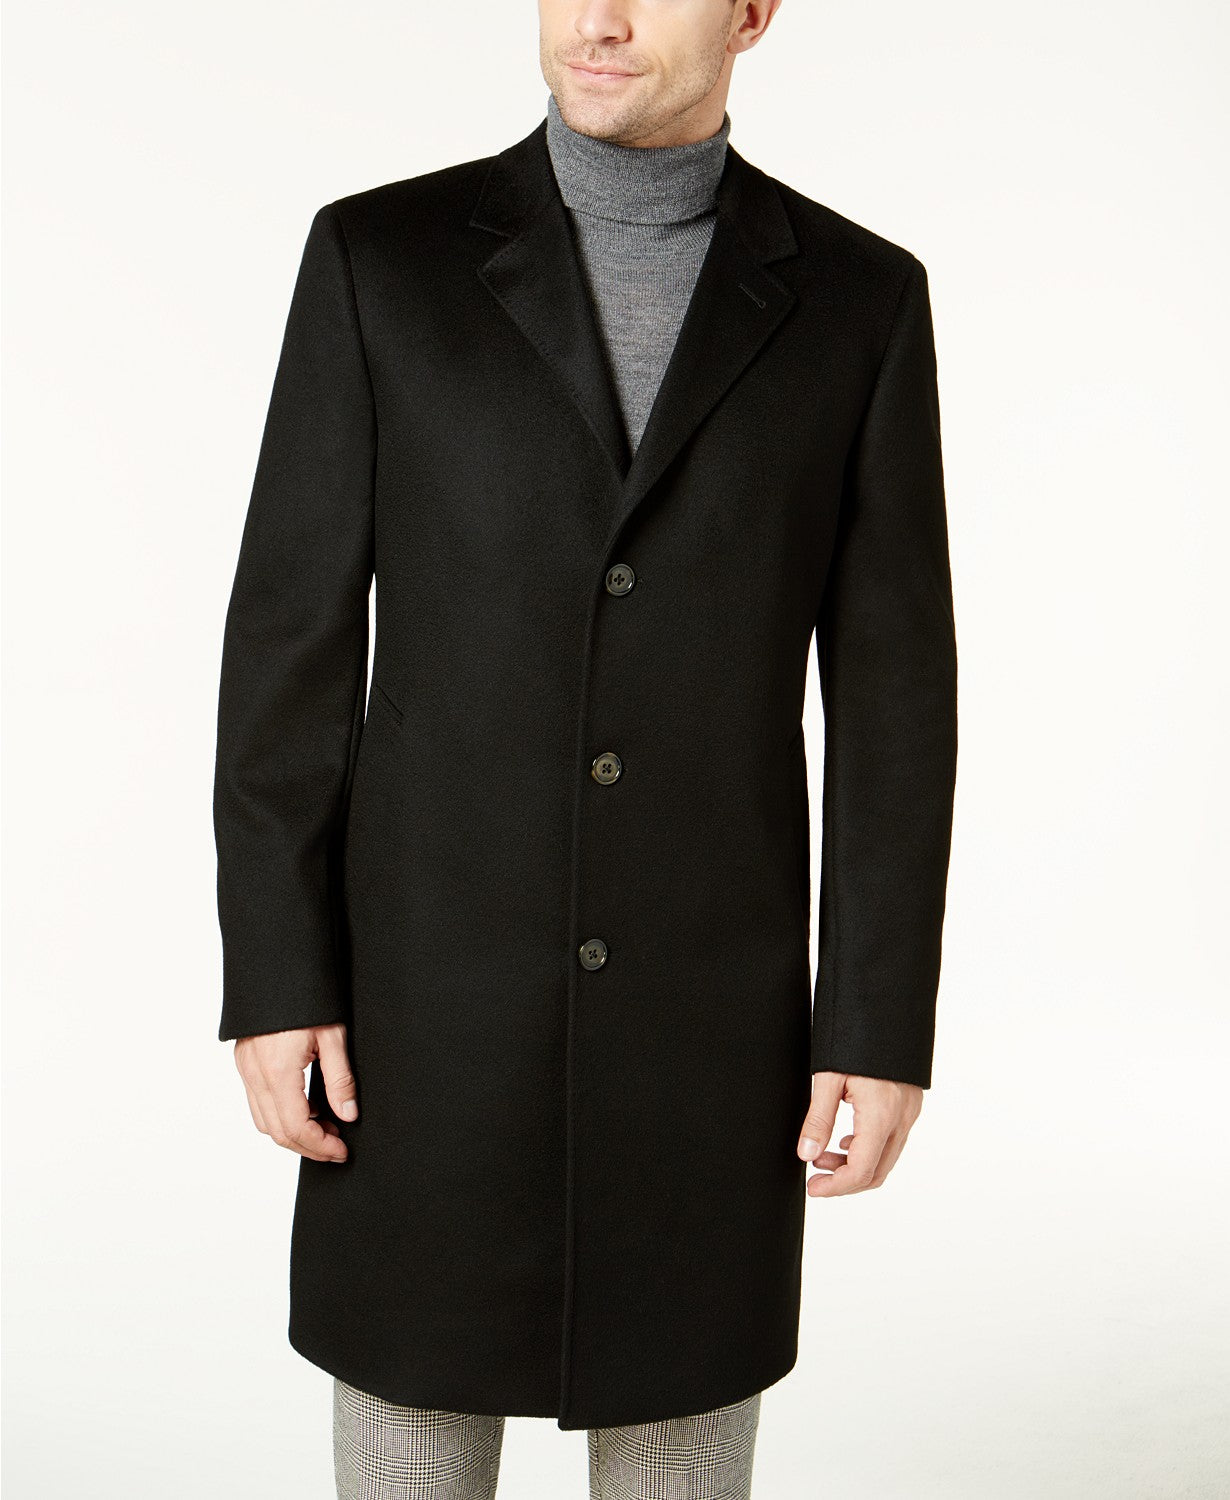 Lauren Ralph Lauren Mens Classic-Fit Pure Cashmere Overcoat Coat 46R Black $1200